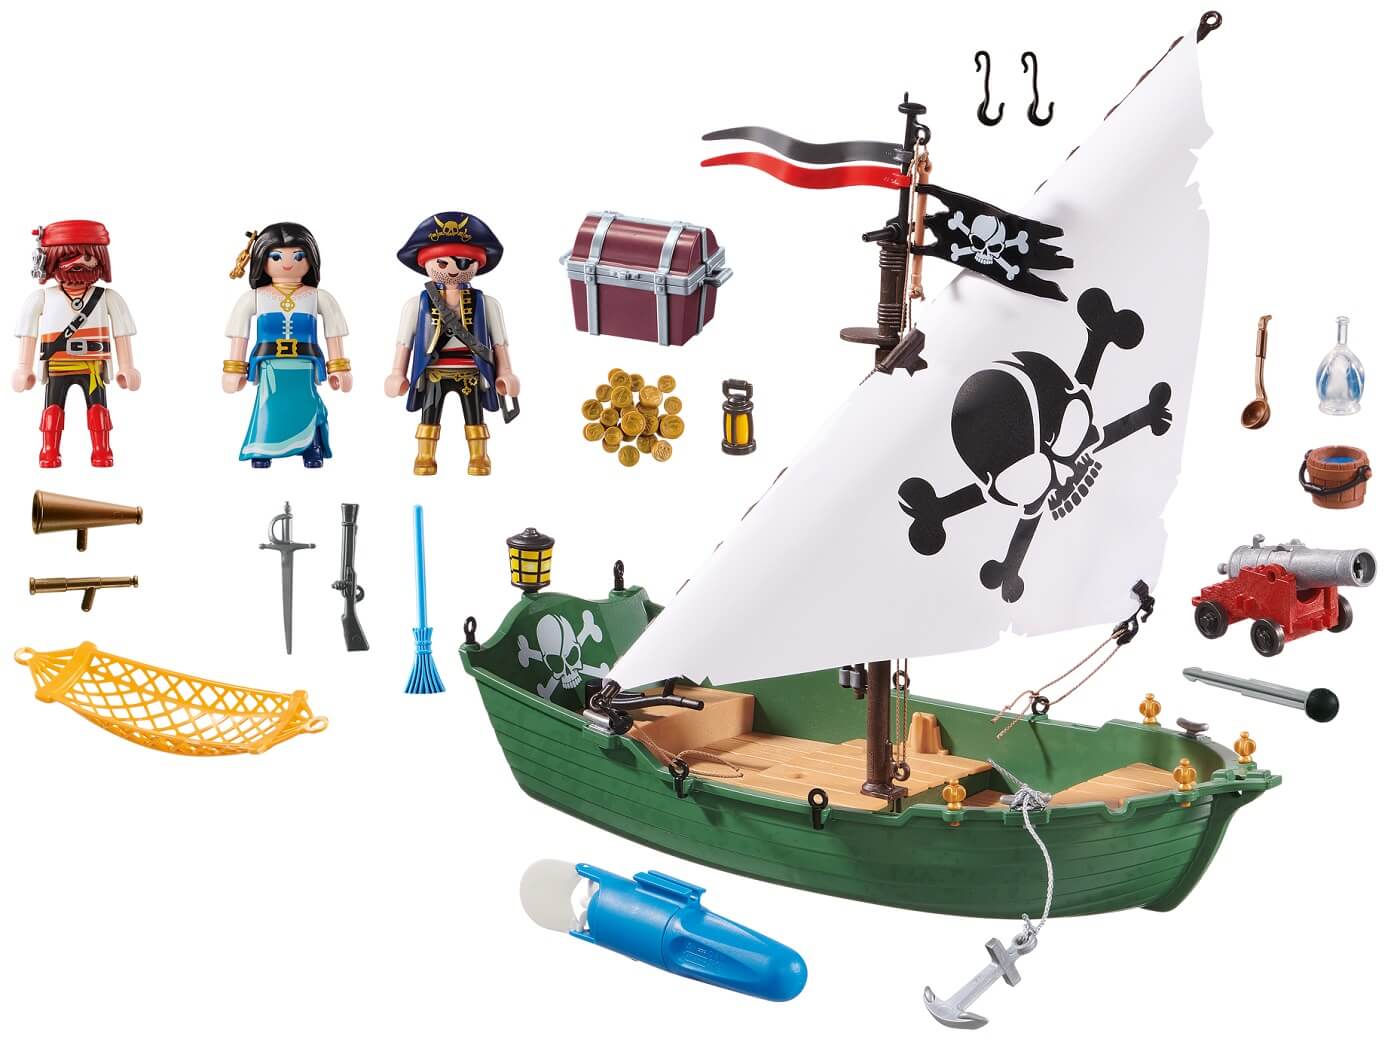 Barco Pirata con motor submarino ( Playmobil 70151 ) imagen c